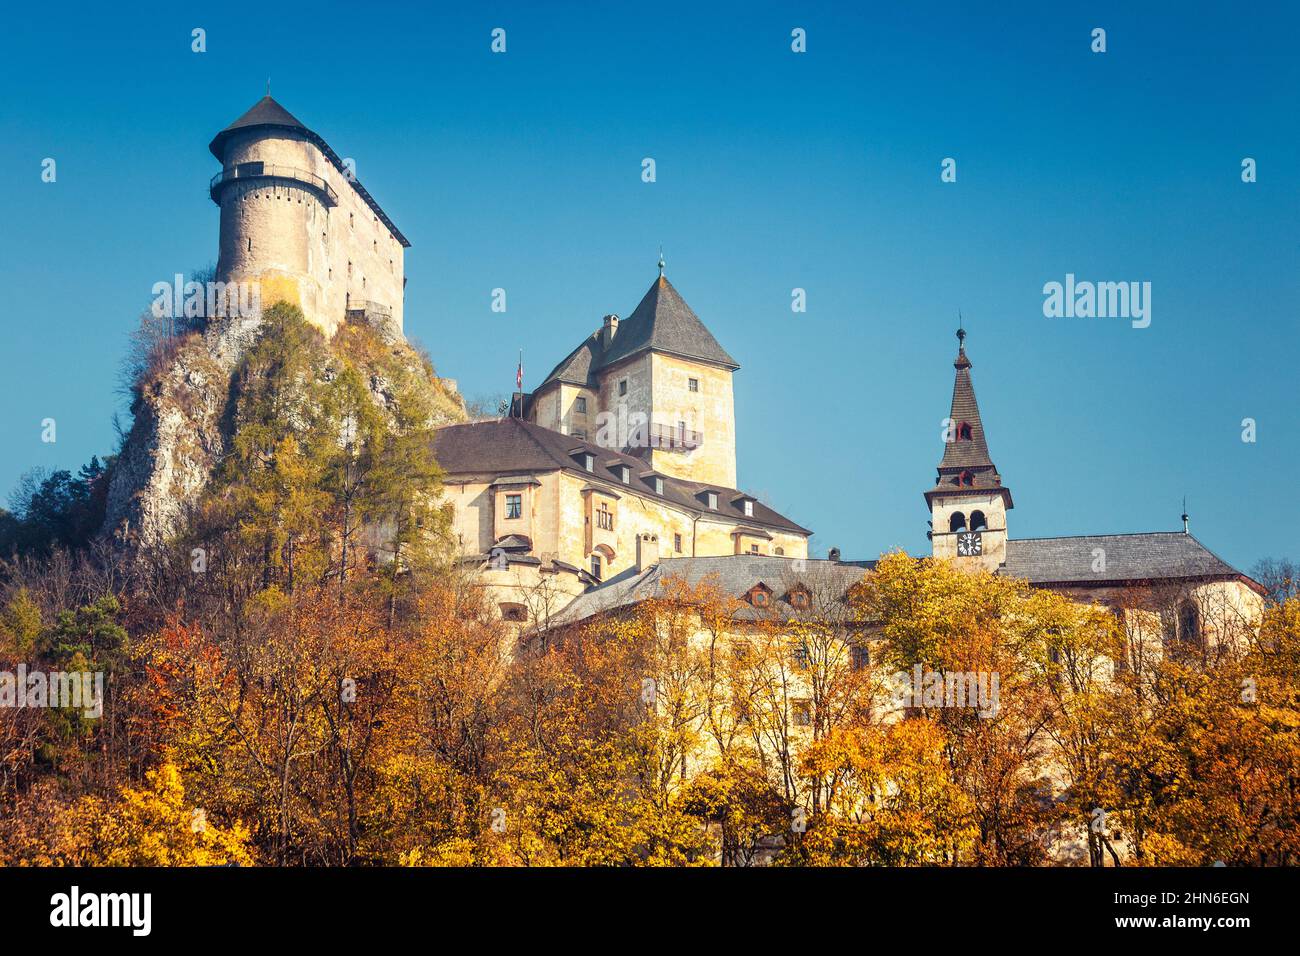 The medieval Orava Castle, central Europe, Slovakia. Stock Photo